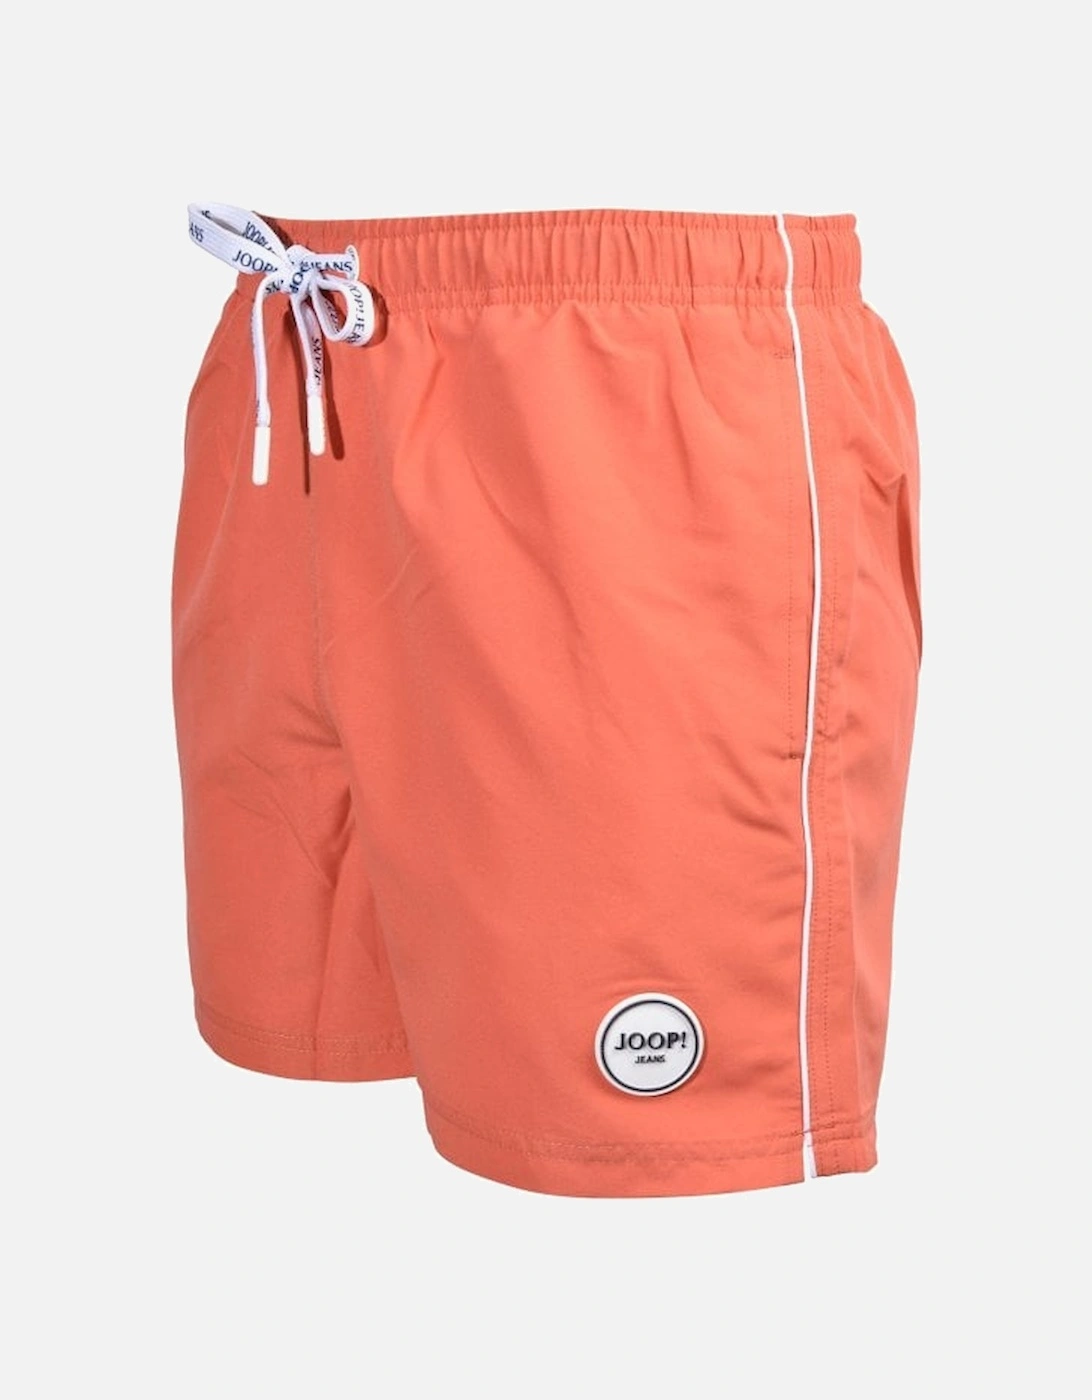 Jeans South Beach Swim Shorts, Coral Orange, 4 of 3